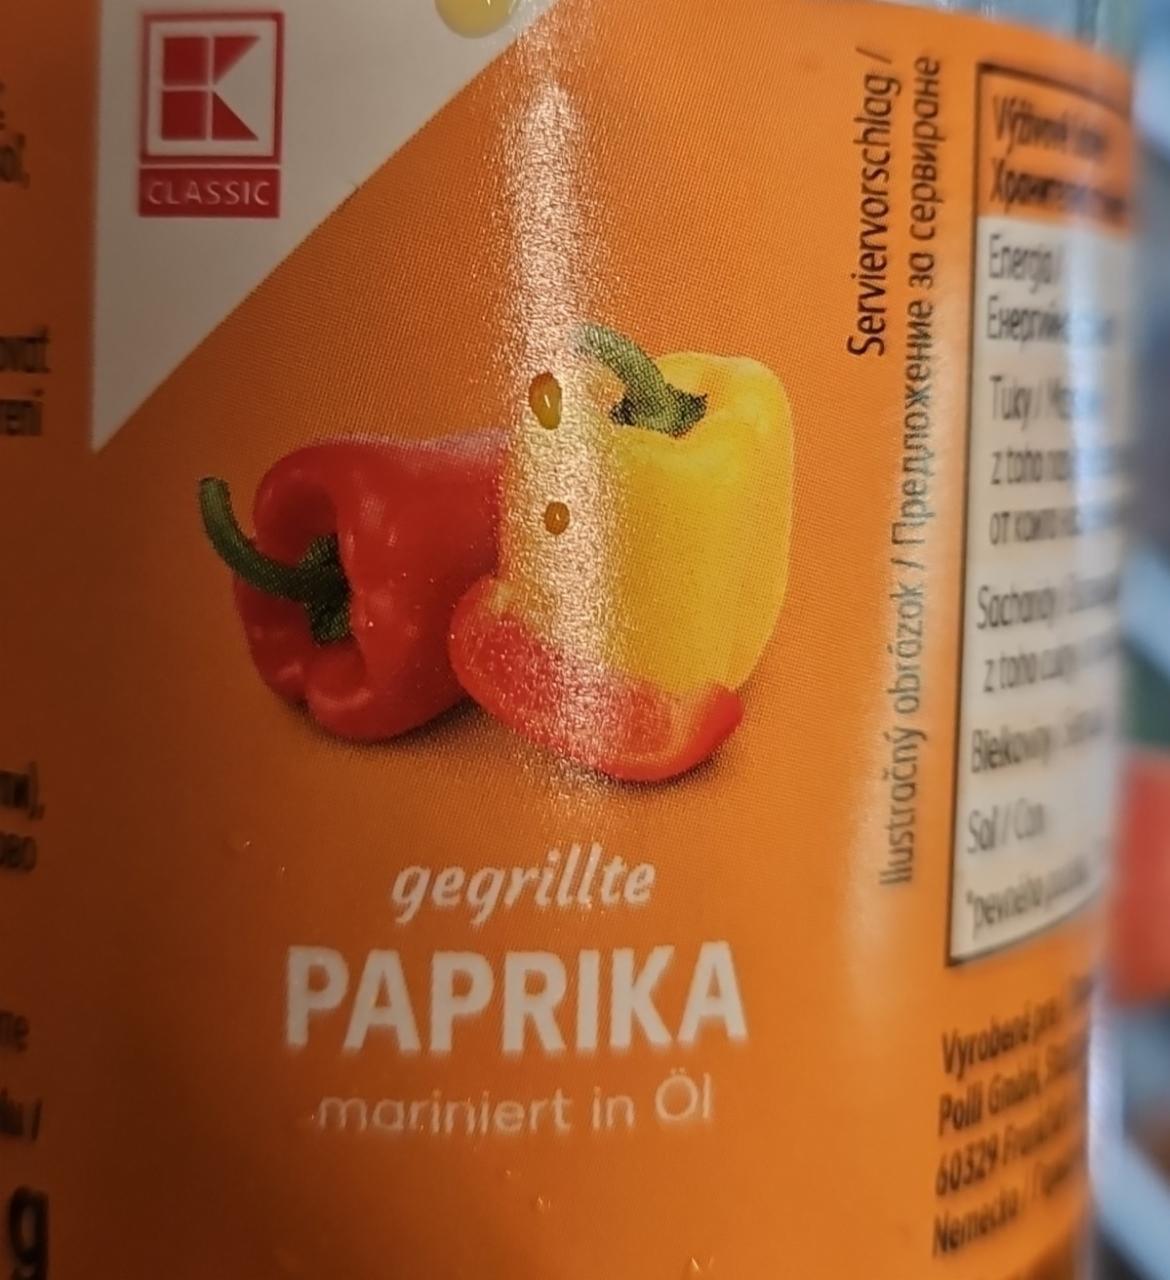 Fotografie - Gegrillte Paprika mariniert in Öl K-Classic